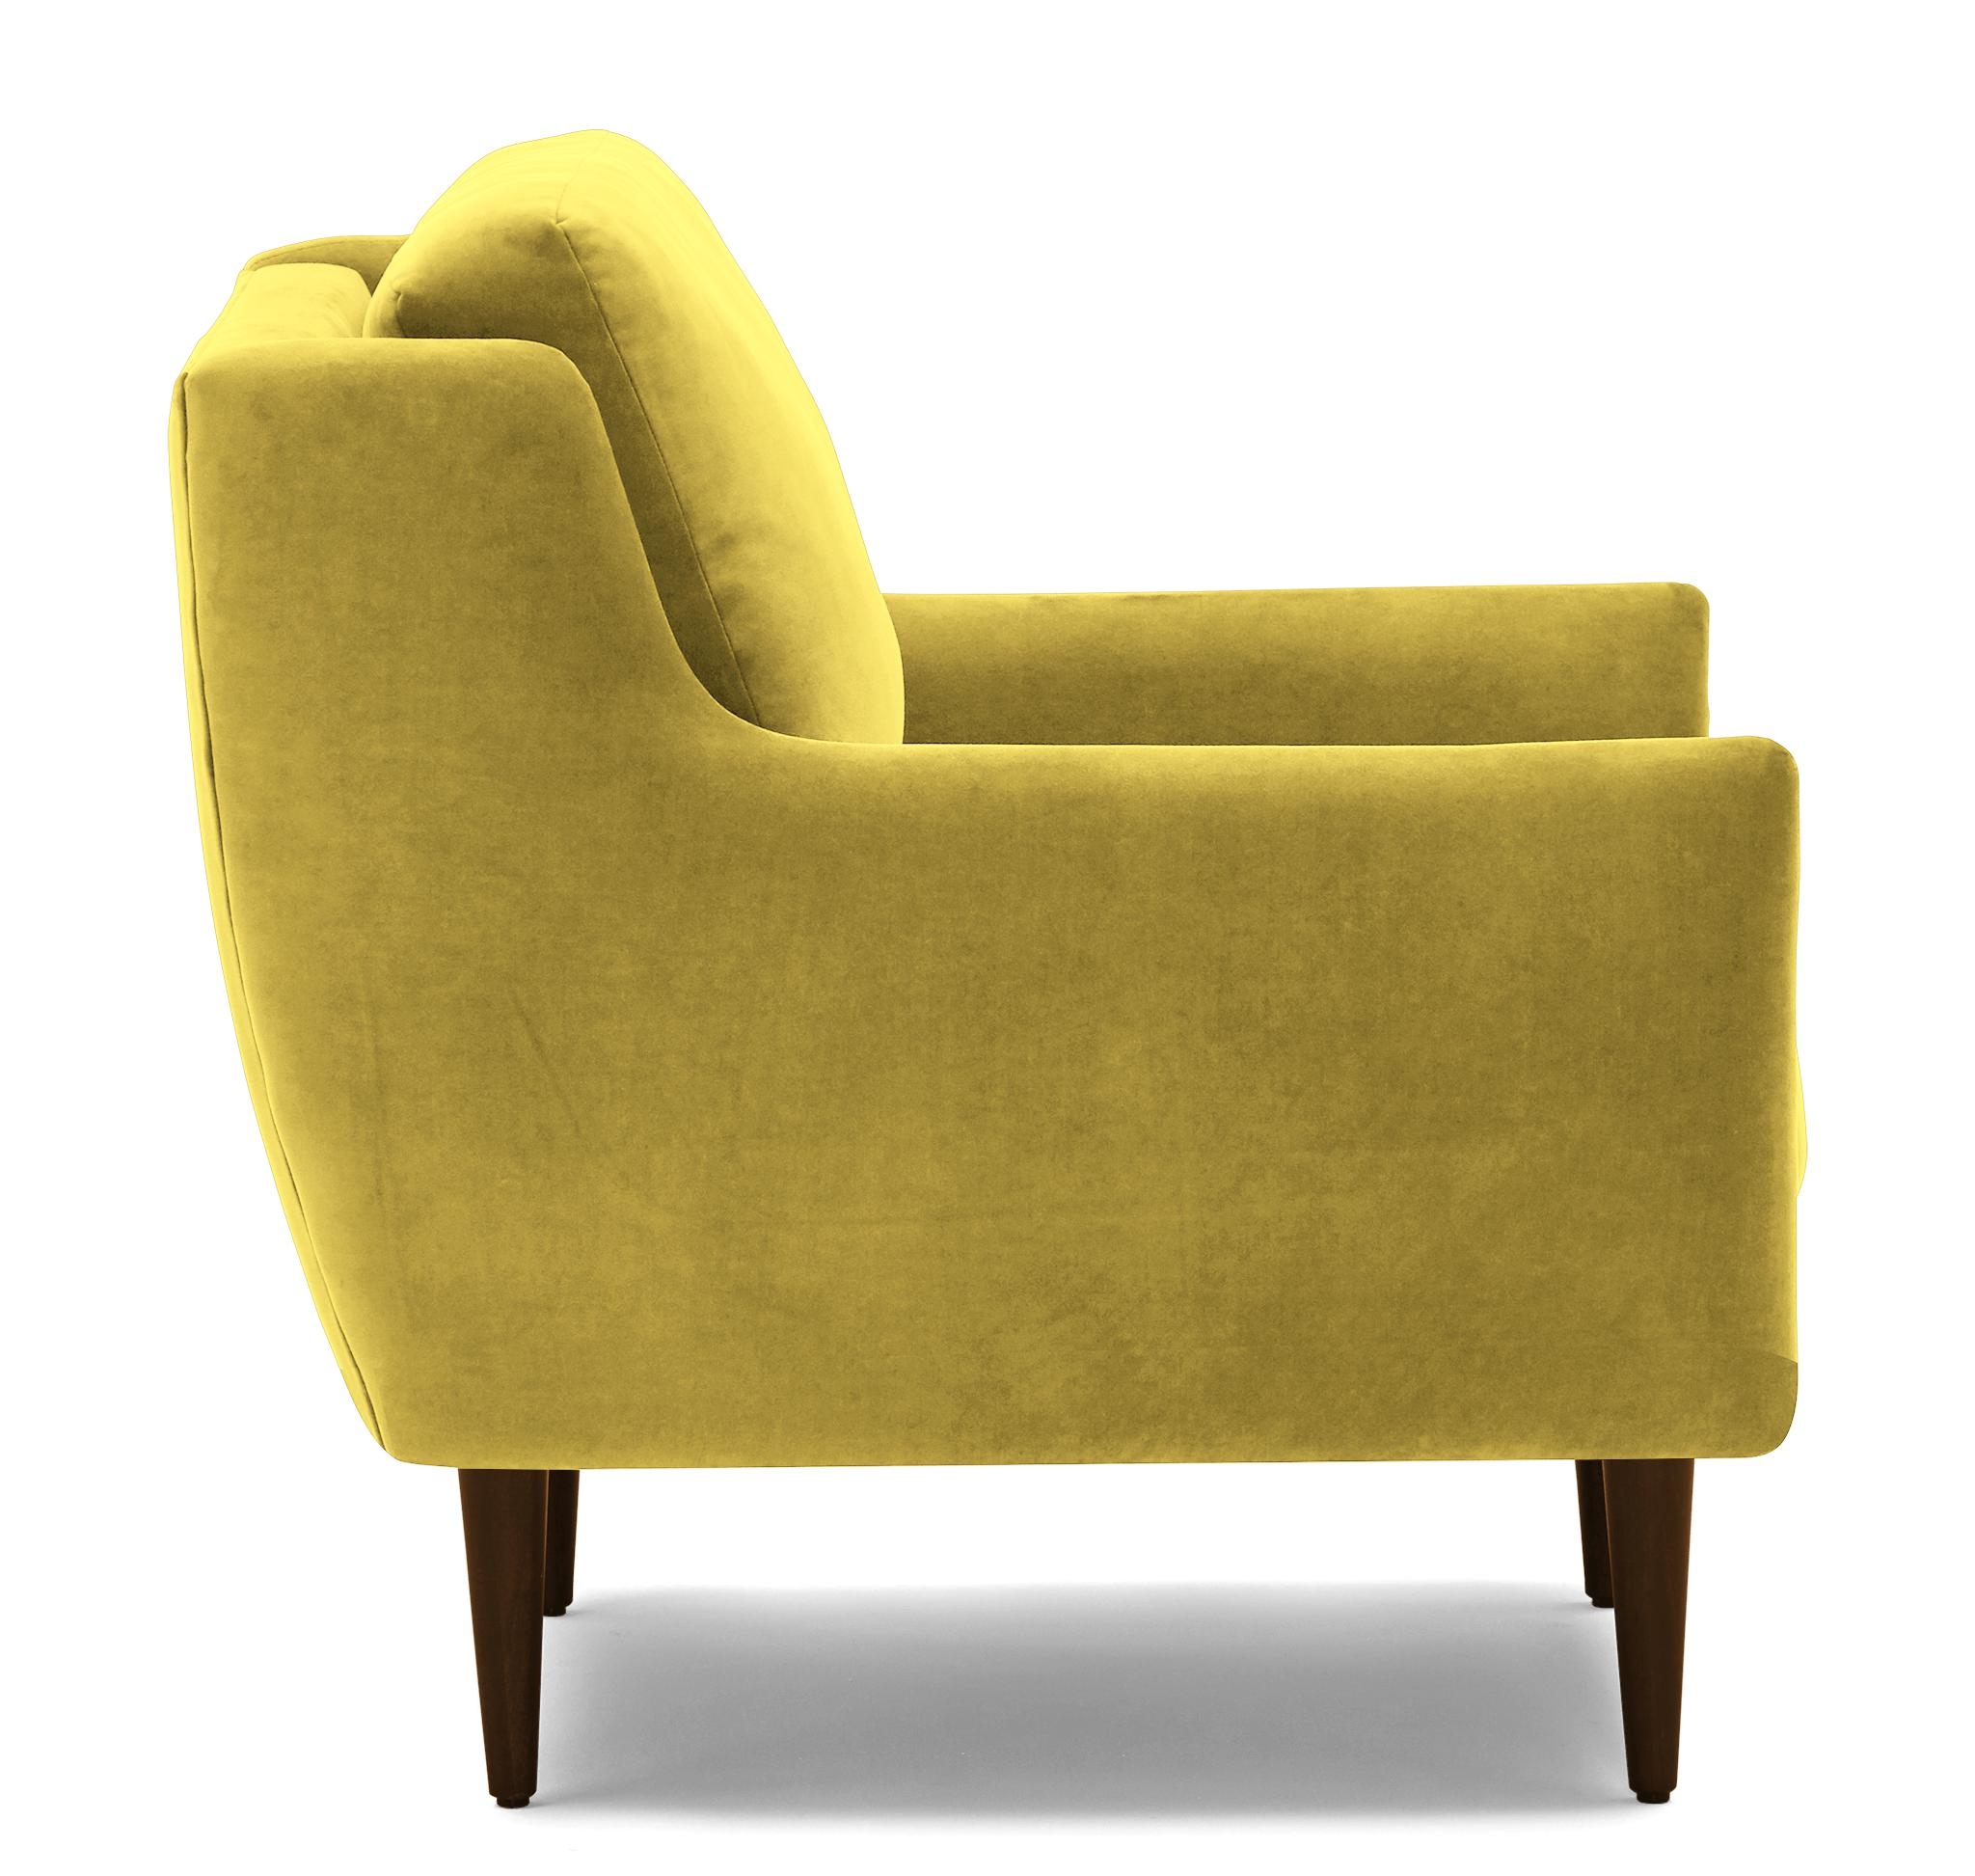 Yellow Bell Mid Century Modern Chair - Taylor Golden - Mocha - Image 2